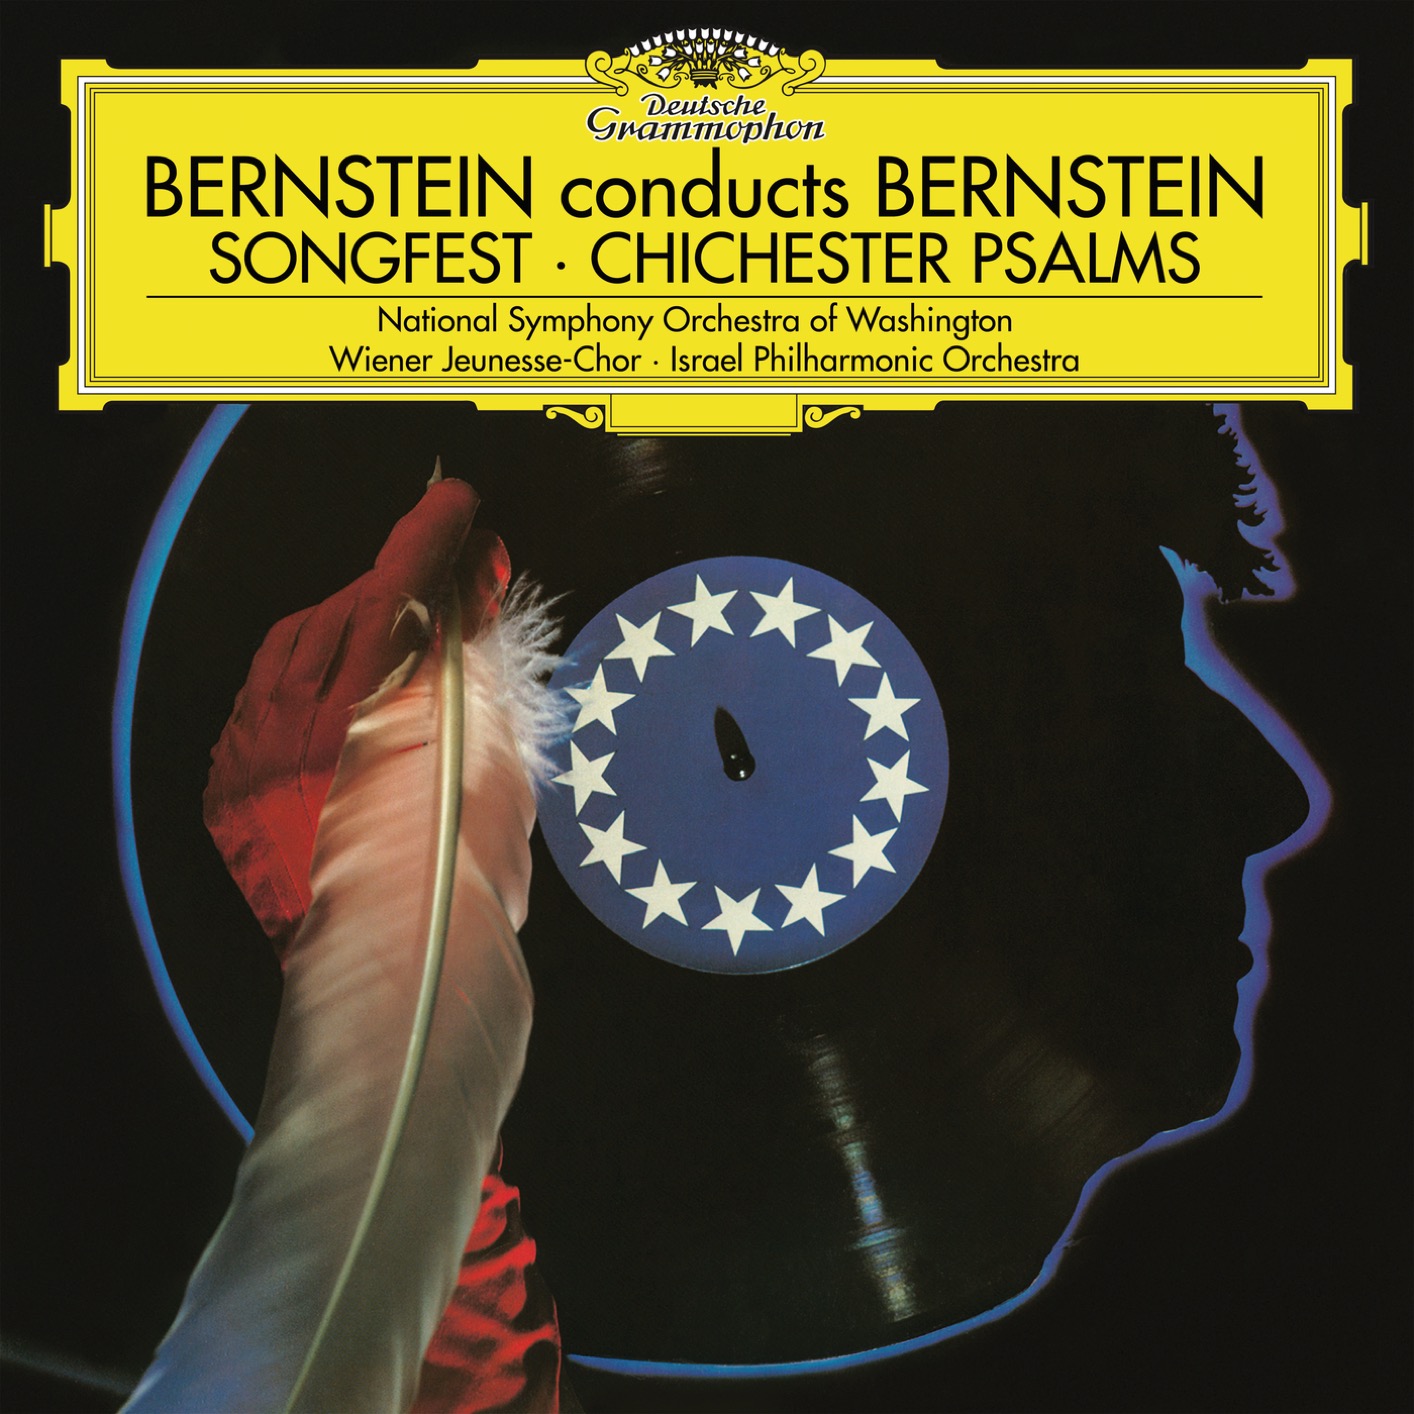 National Symphony Orchestra Washington - Bernstein: Songfest, Chichester Psalms (1978/2017) [FLAC 24bit/96kHz]